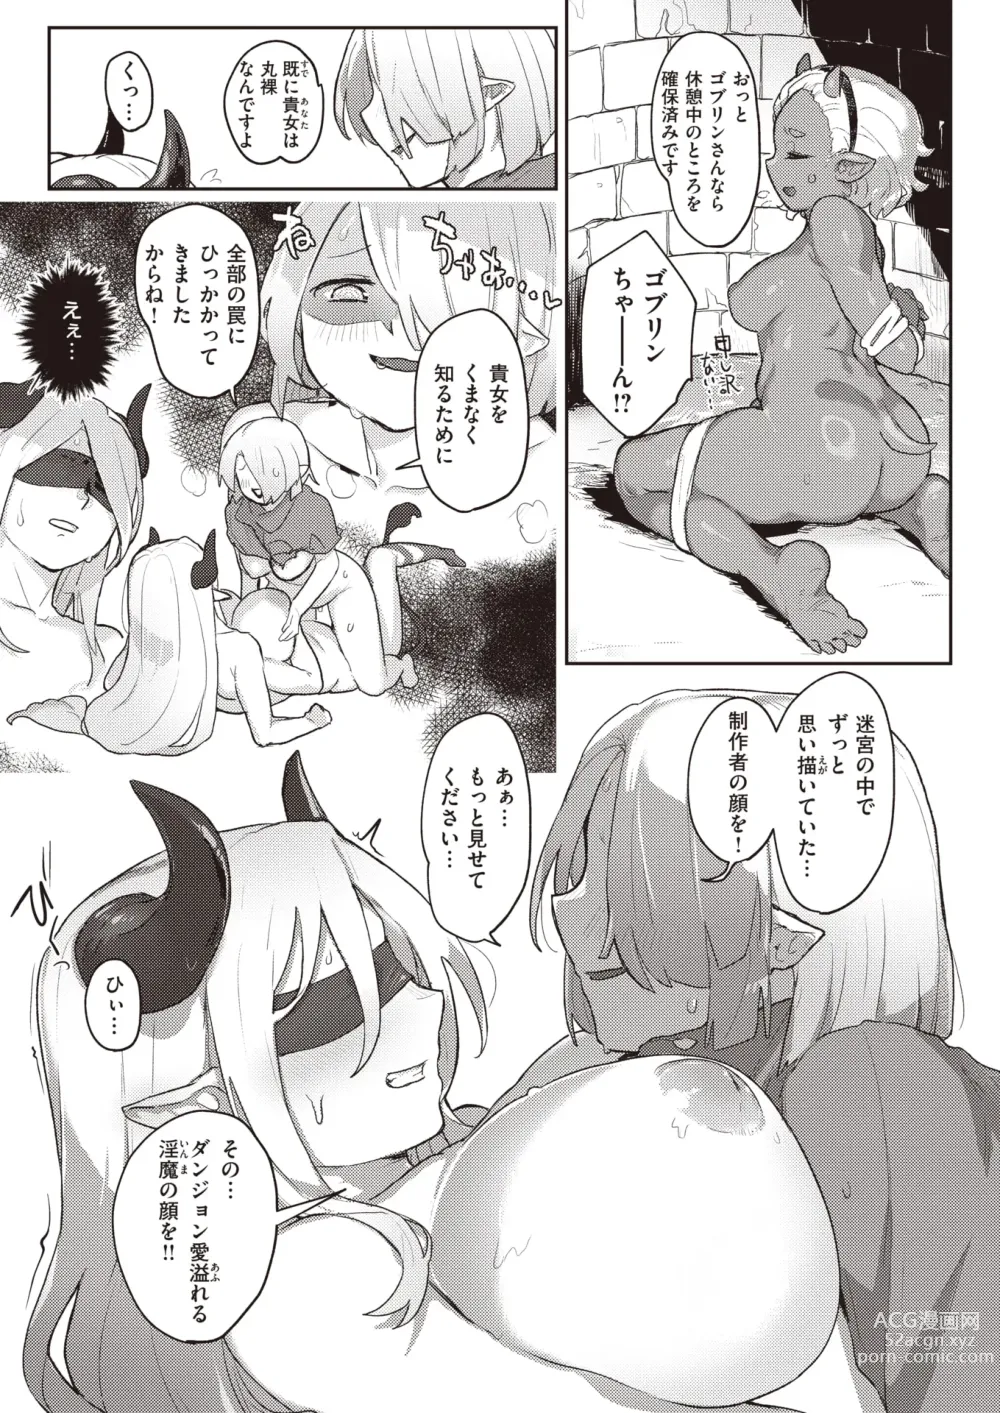 Page 66 of manga Isekai Rakuten Vol. 24